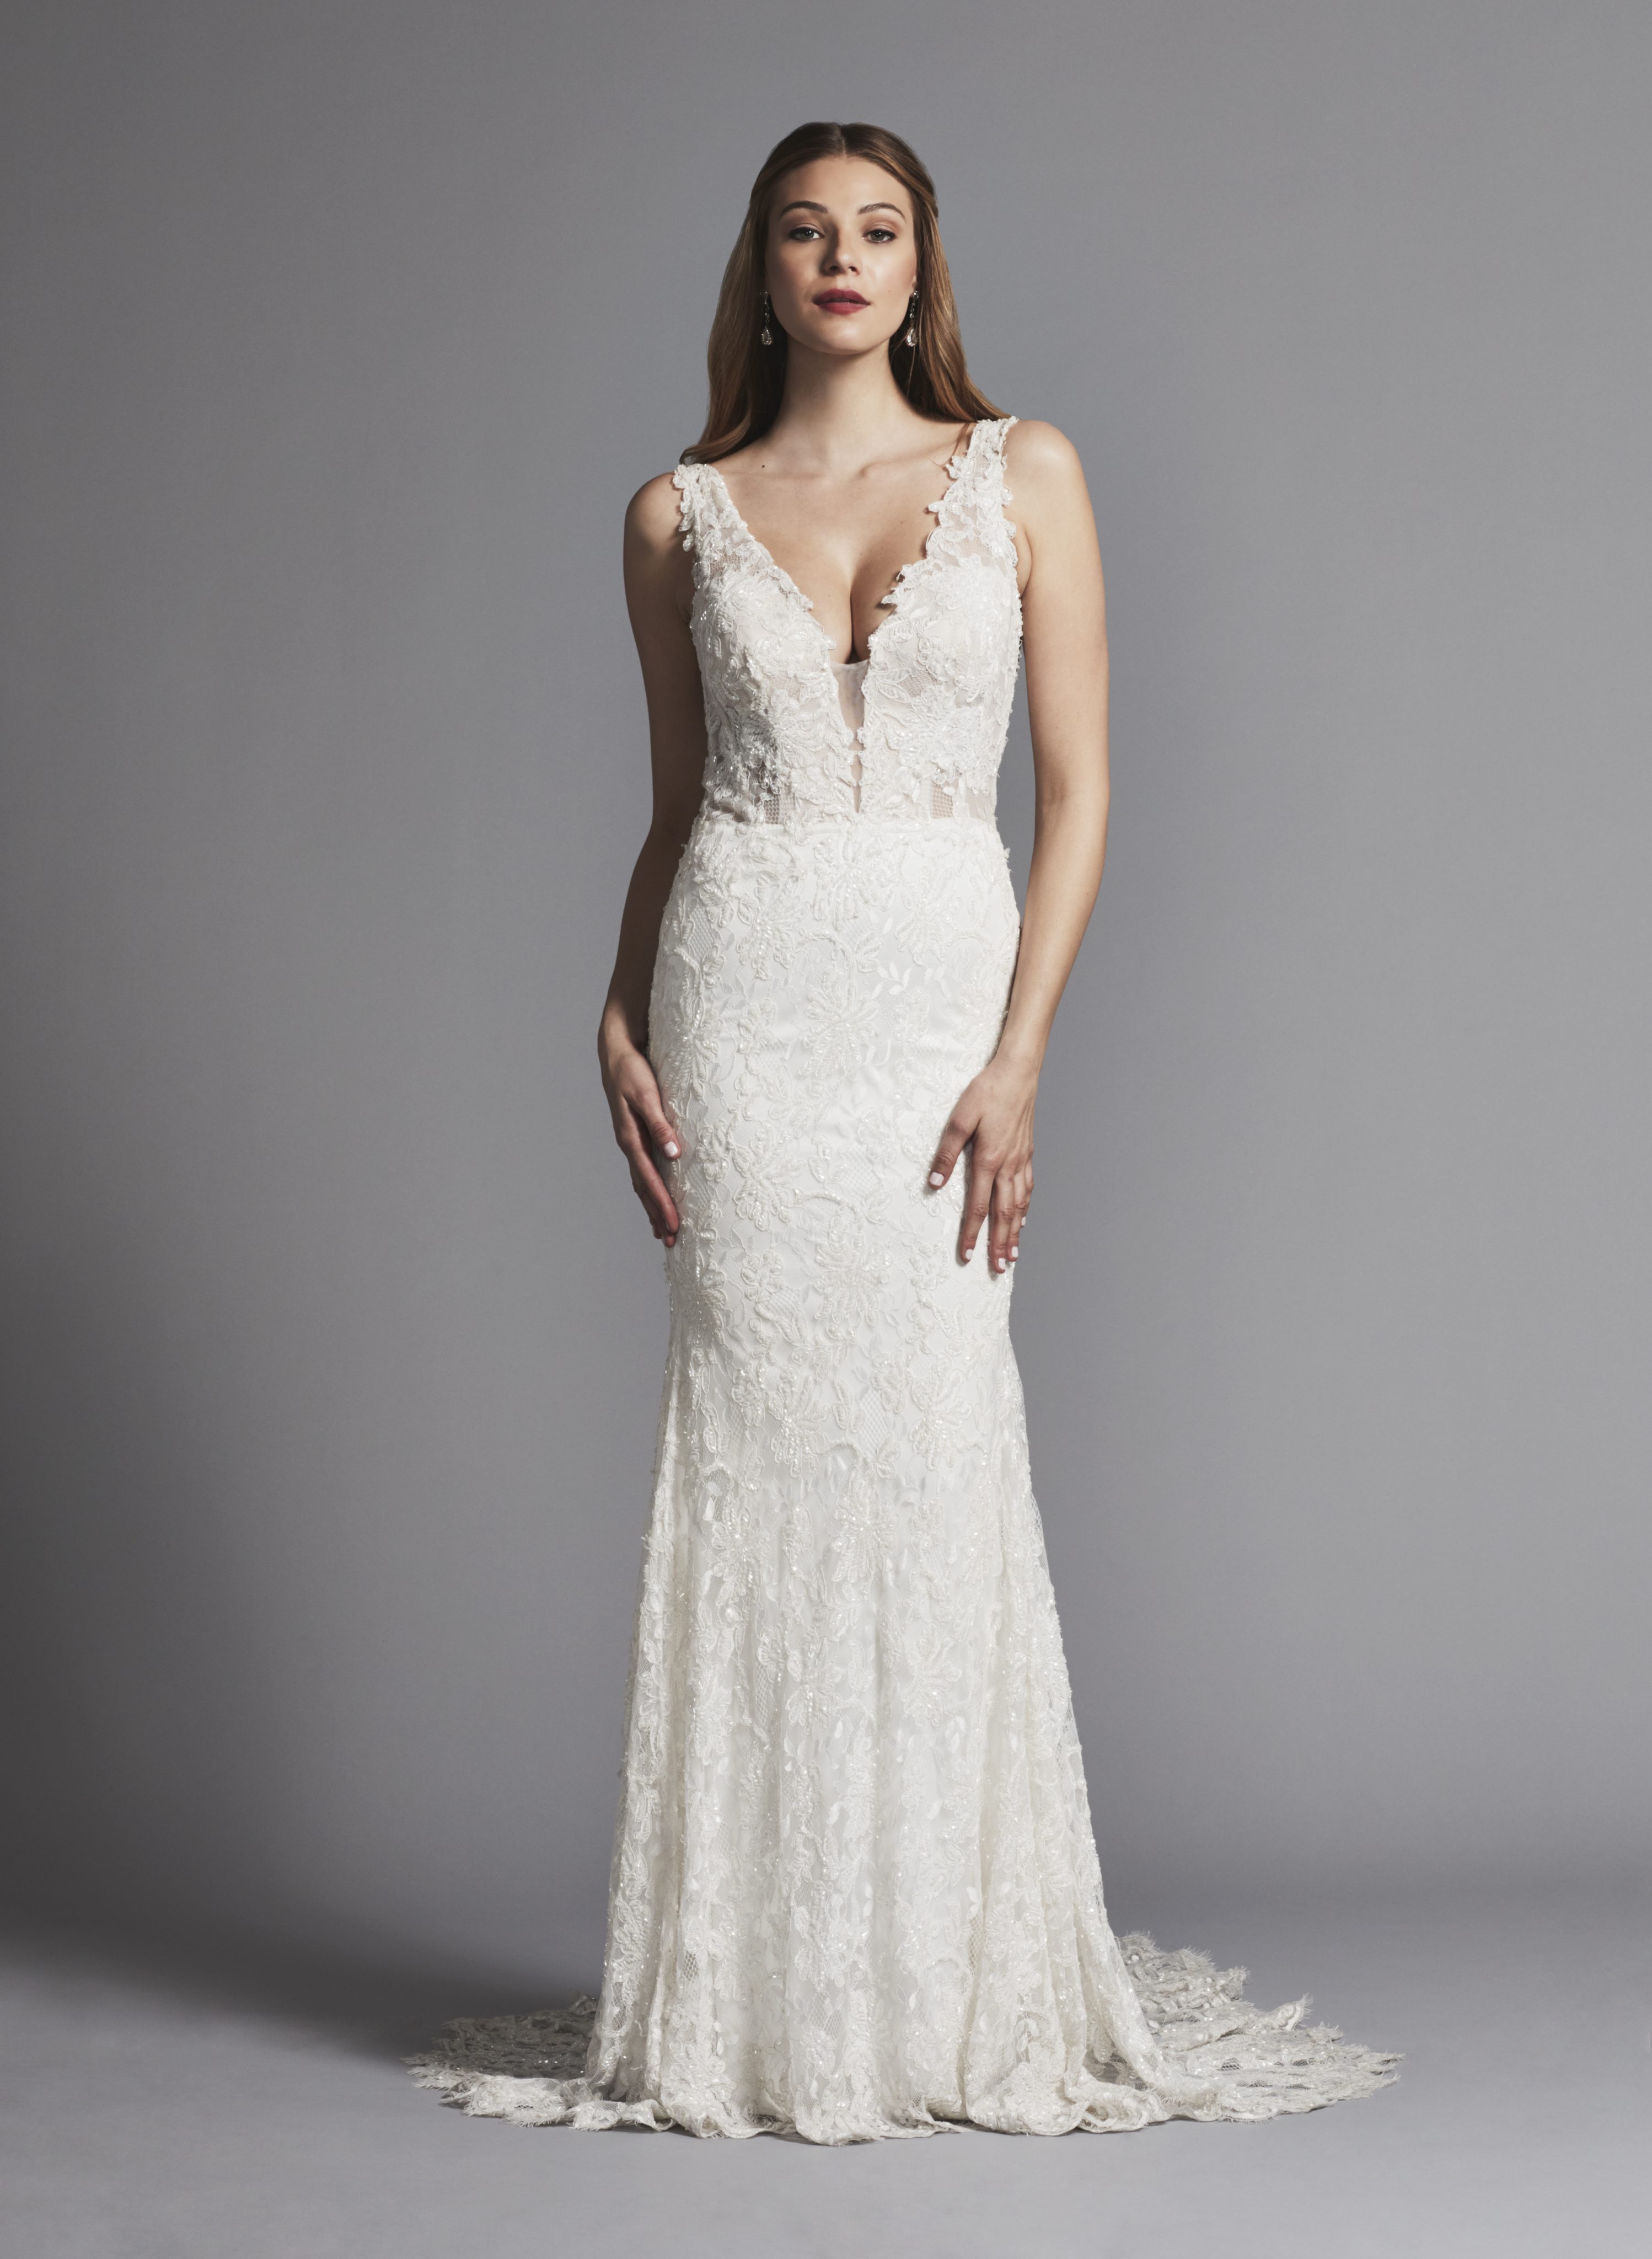 Elegant sheath wedding gowns designs images